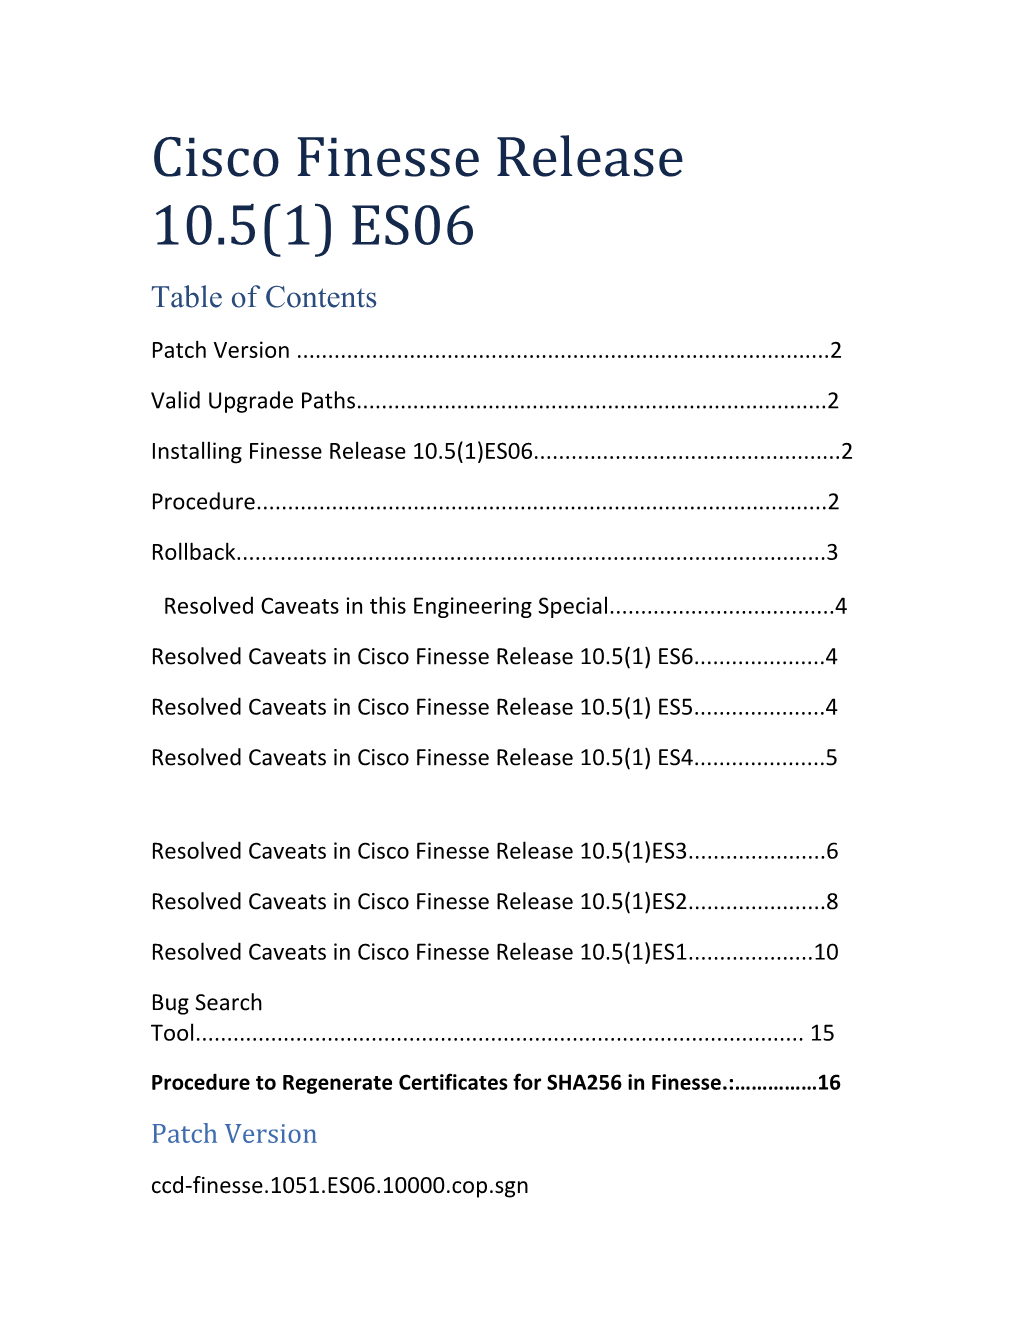 Cisco Finesse Release 10.5(1) ES06